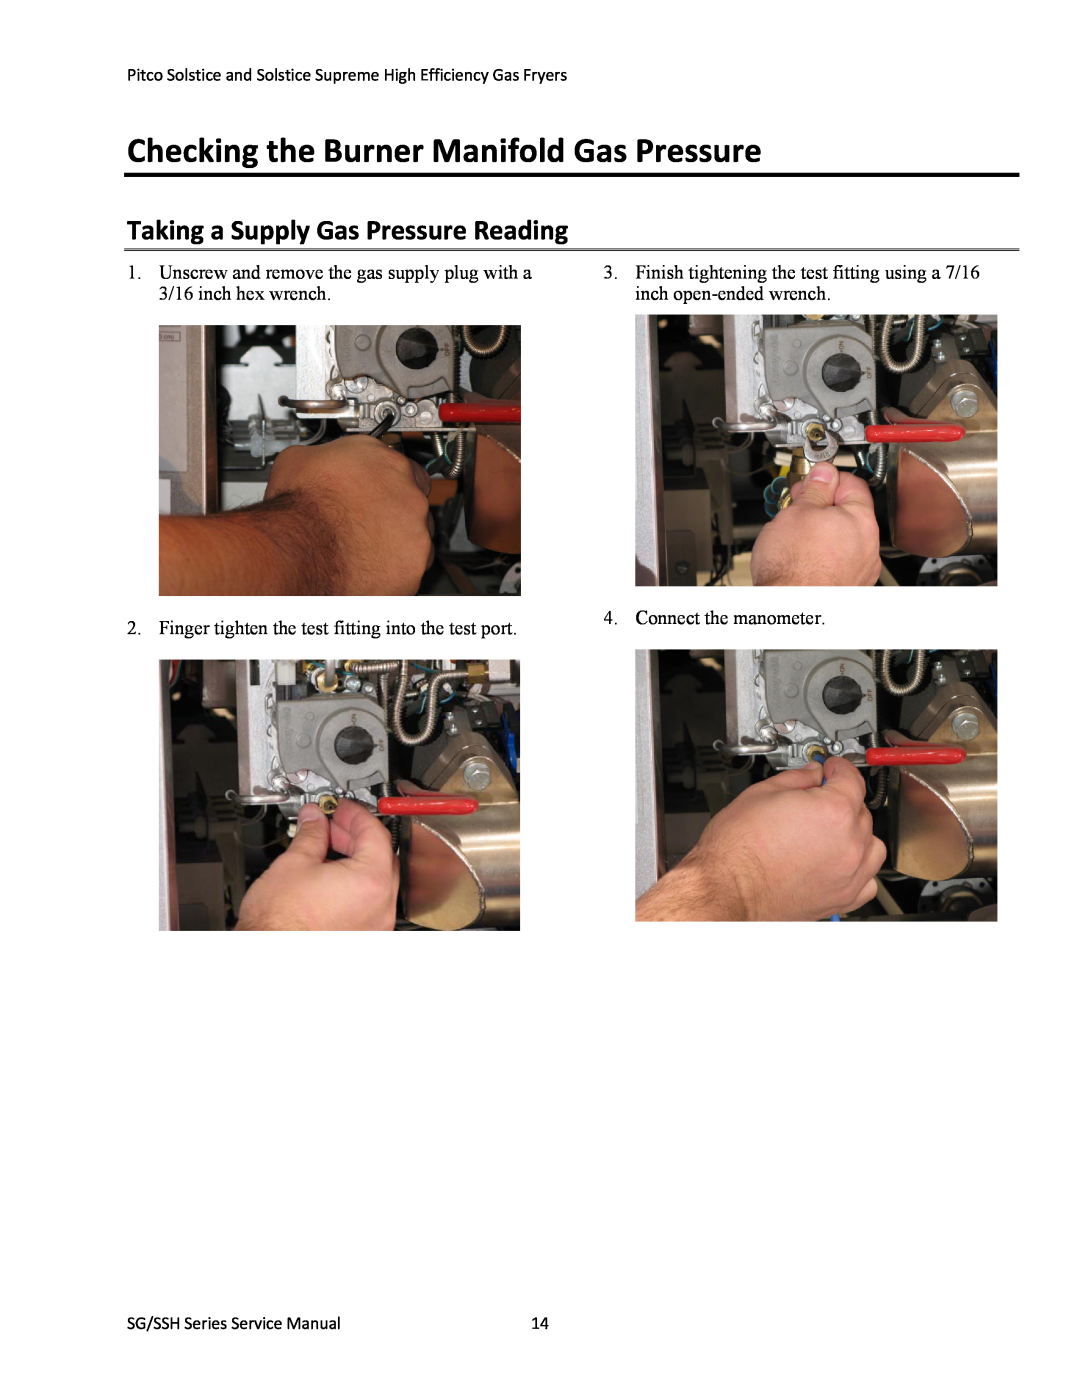 Pitco Frialator L22-345 manual Checking the Burner Manifold Gas Pressure, Taking a Supply Gas Pressure Reading 